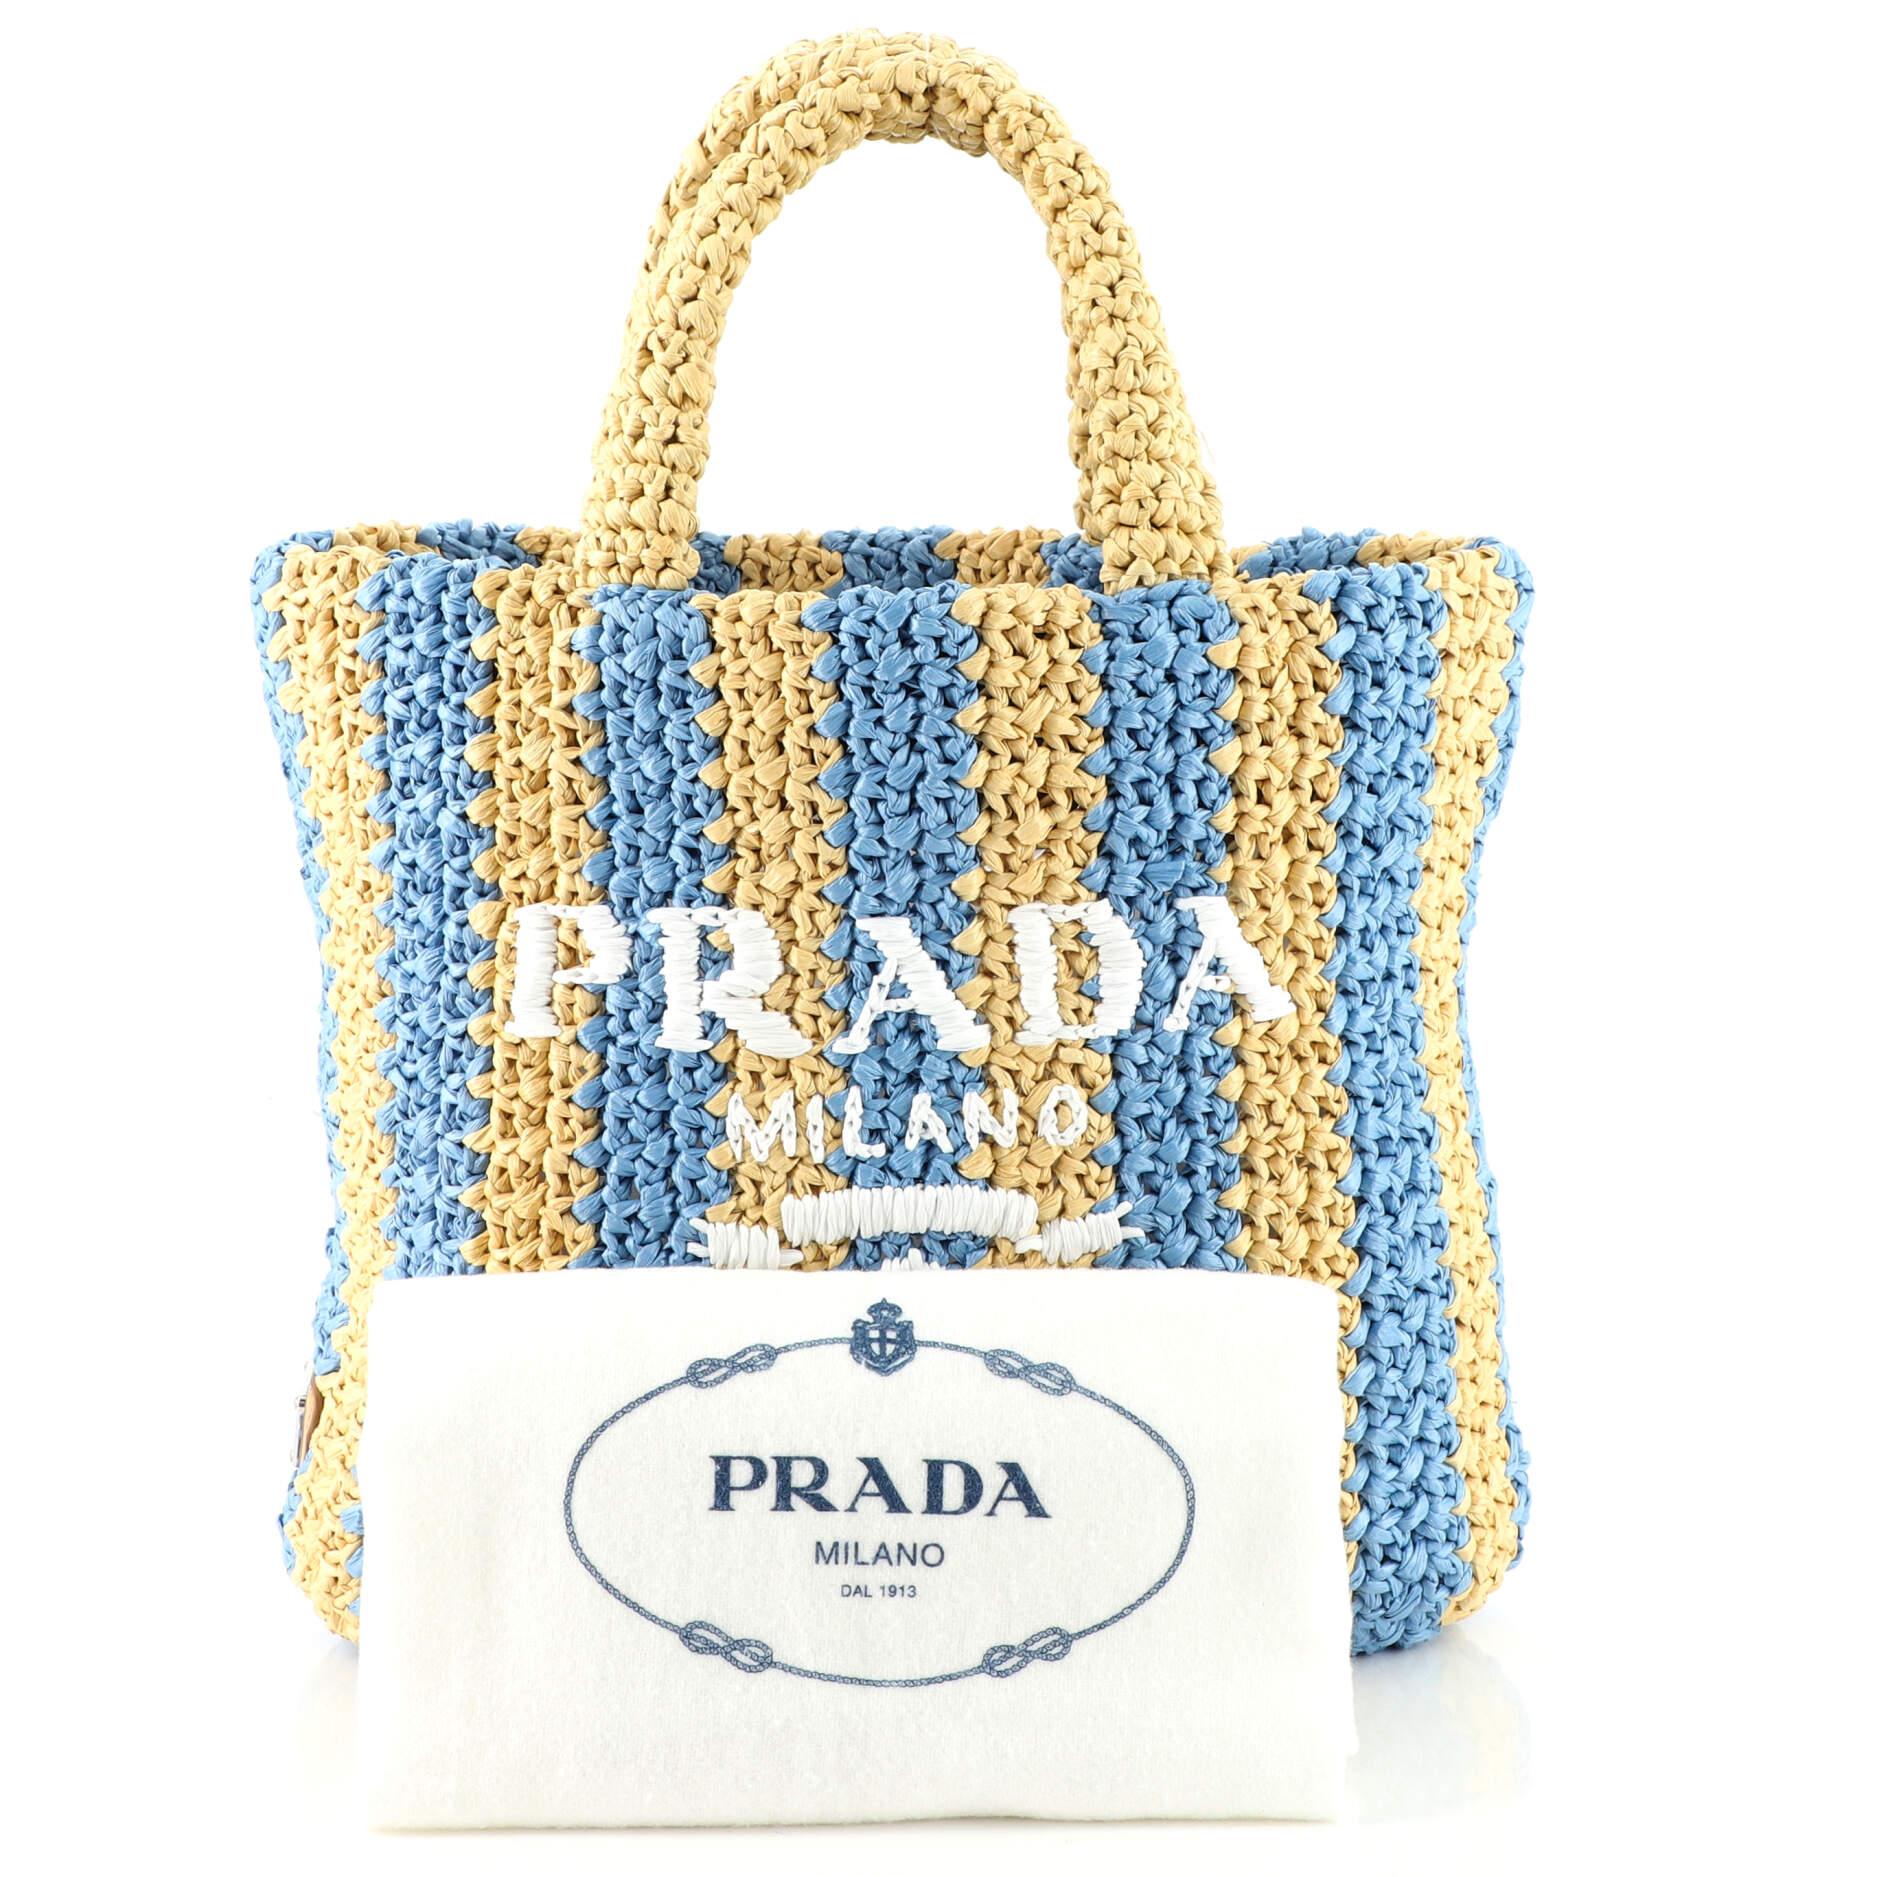 Sold at Auction: PRADA CROCHET RAFFIA TOTE BAG